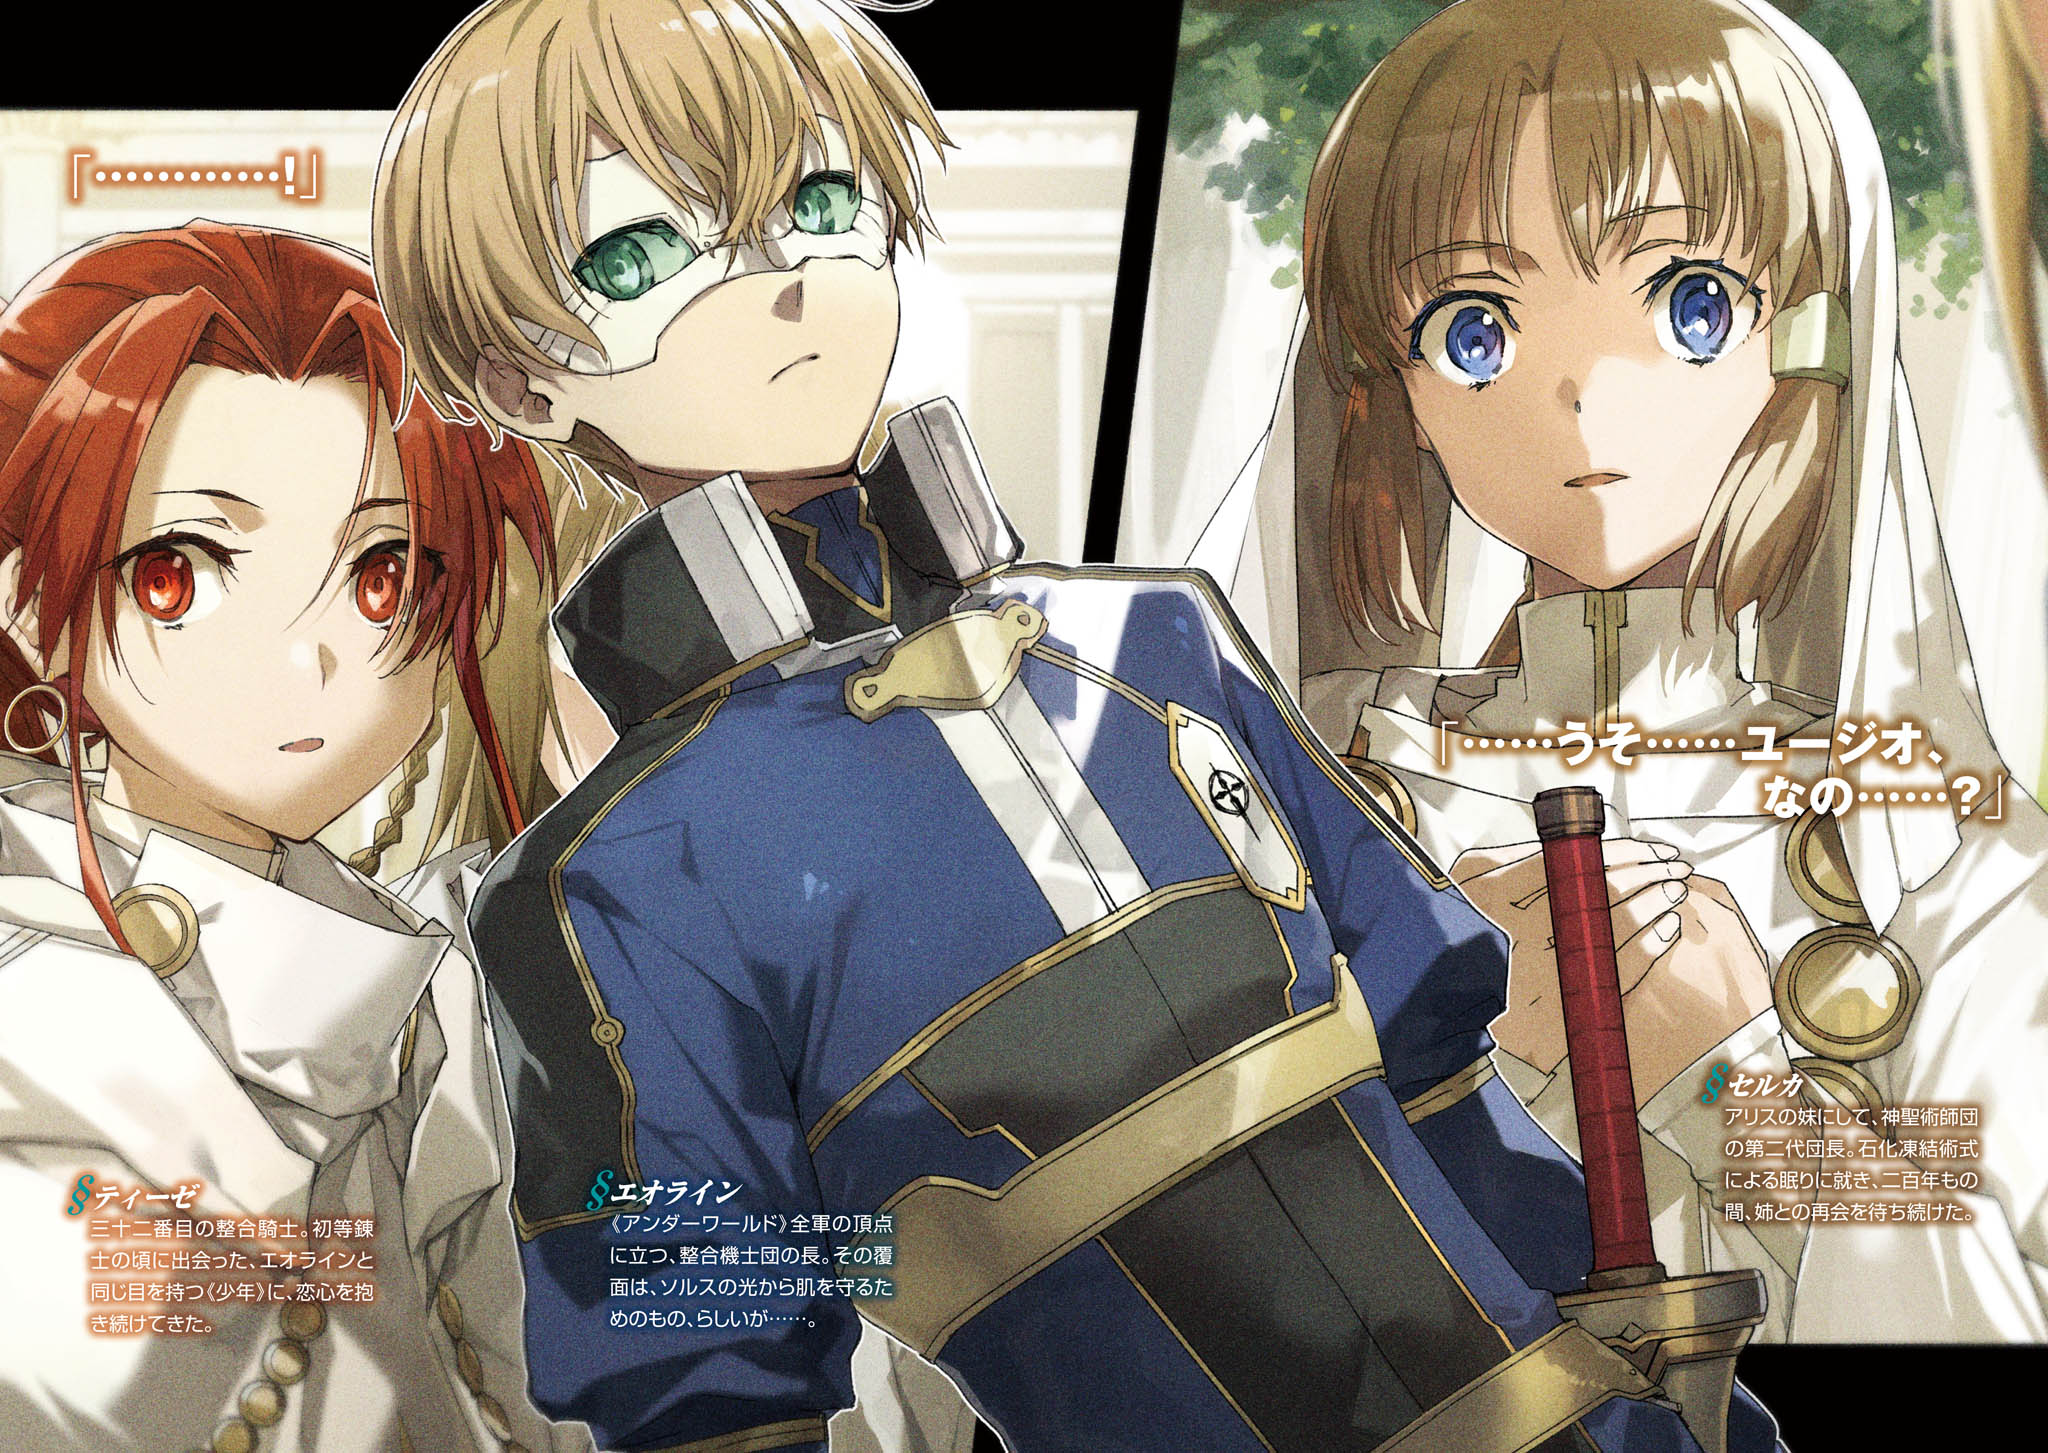 sword art online - What is causing Kirito's eyes to change colour? - Anime  & Manga Stack Exchange